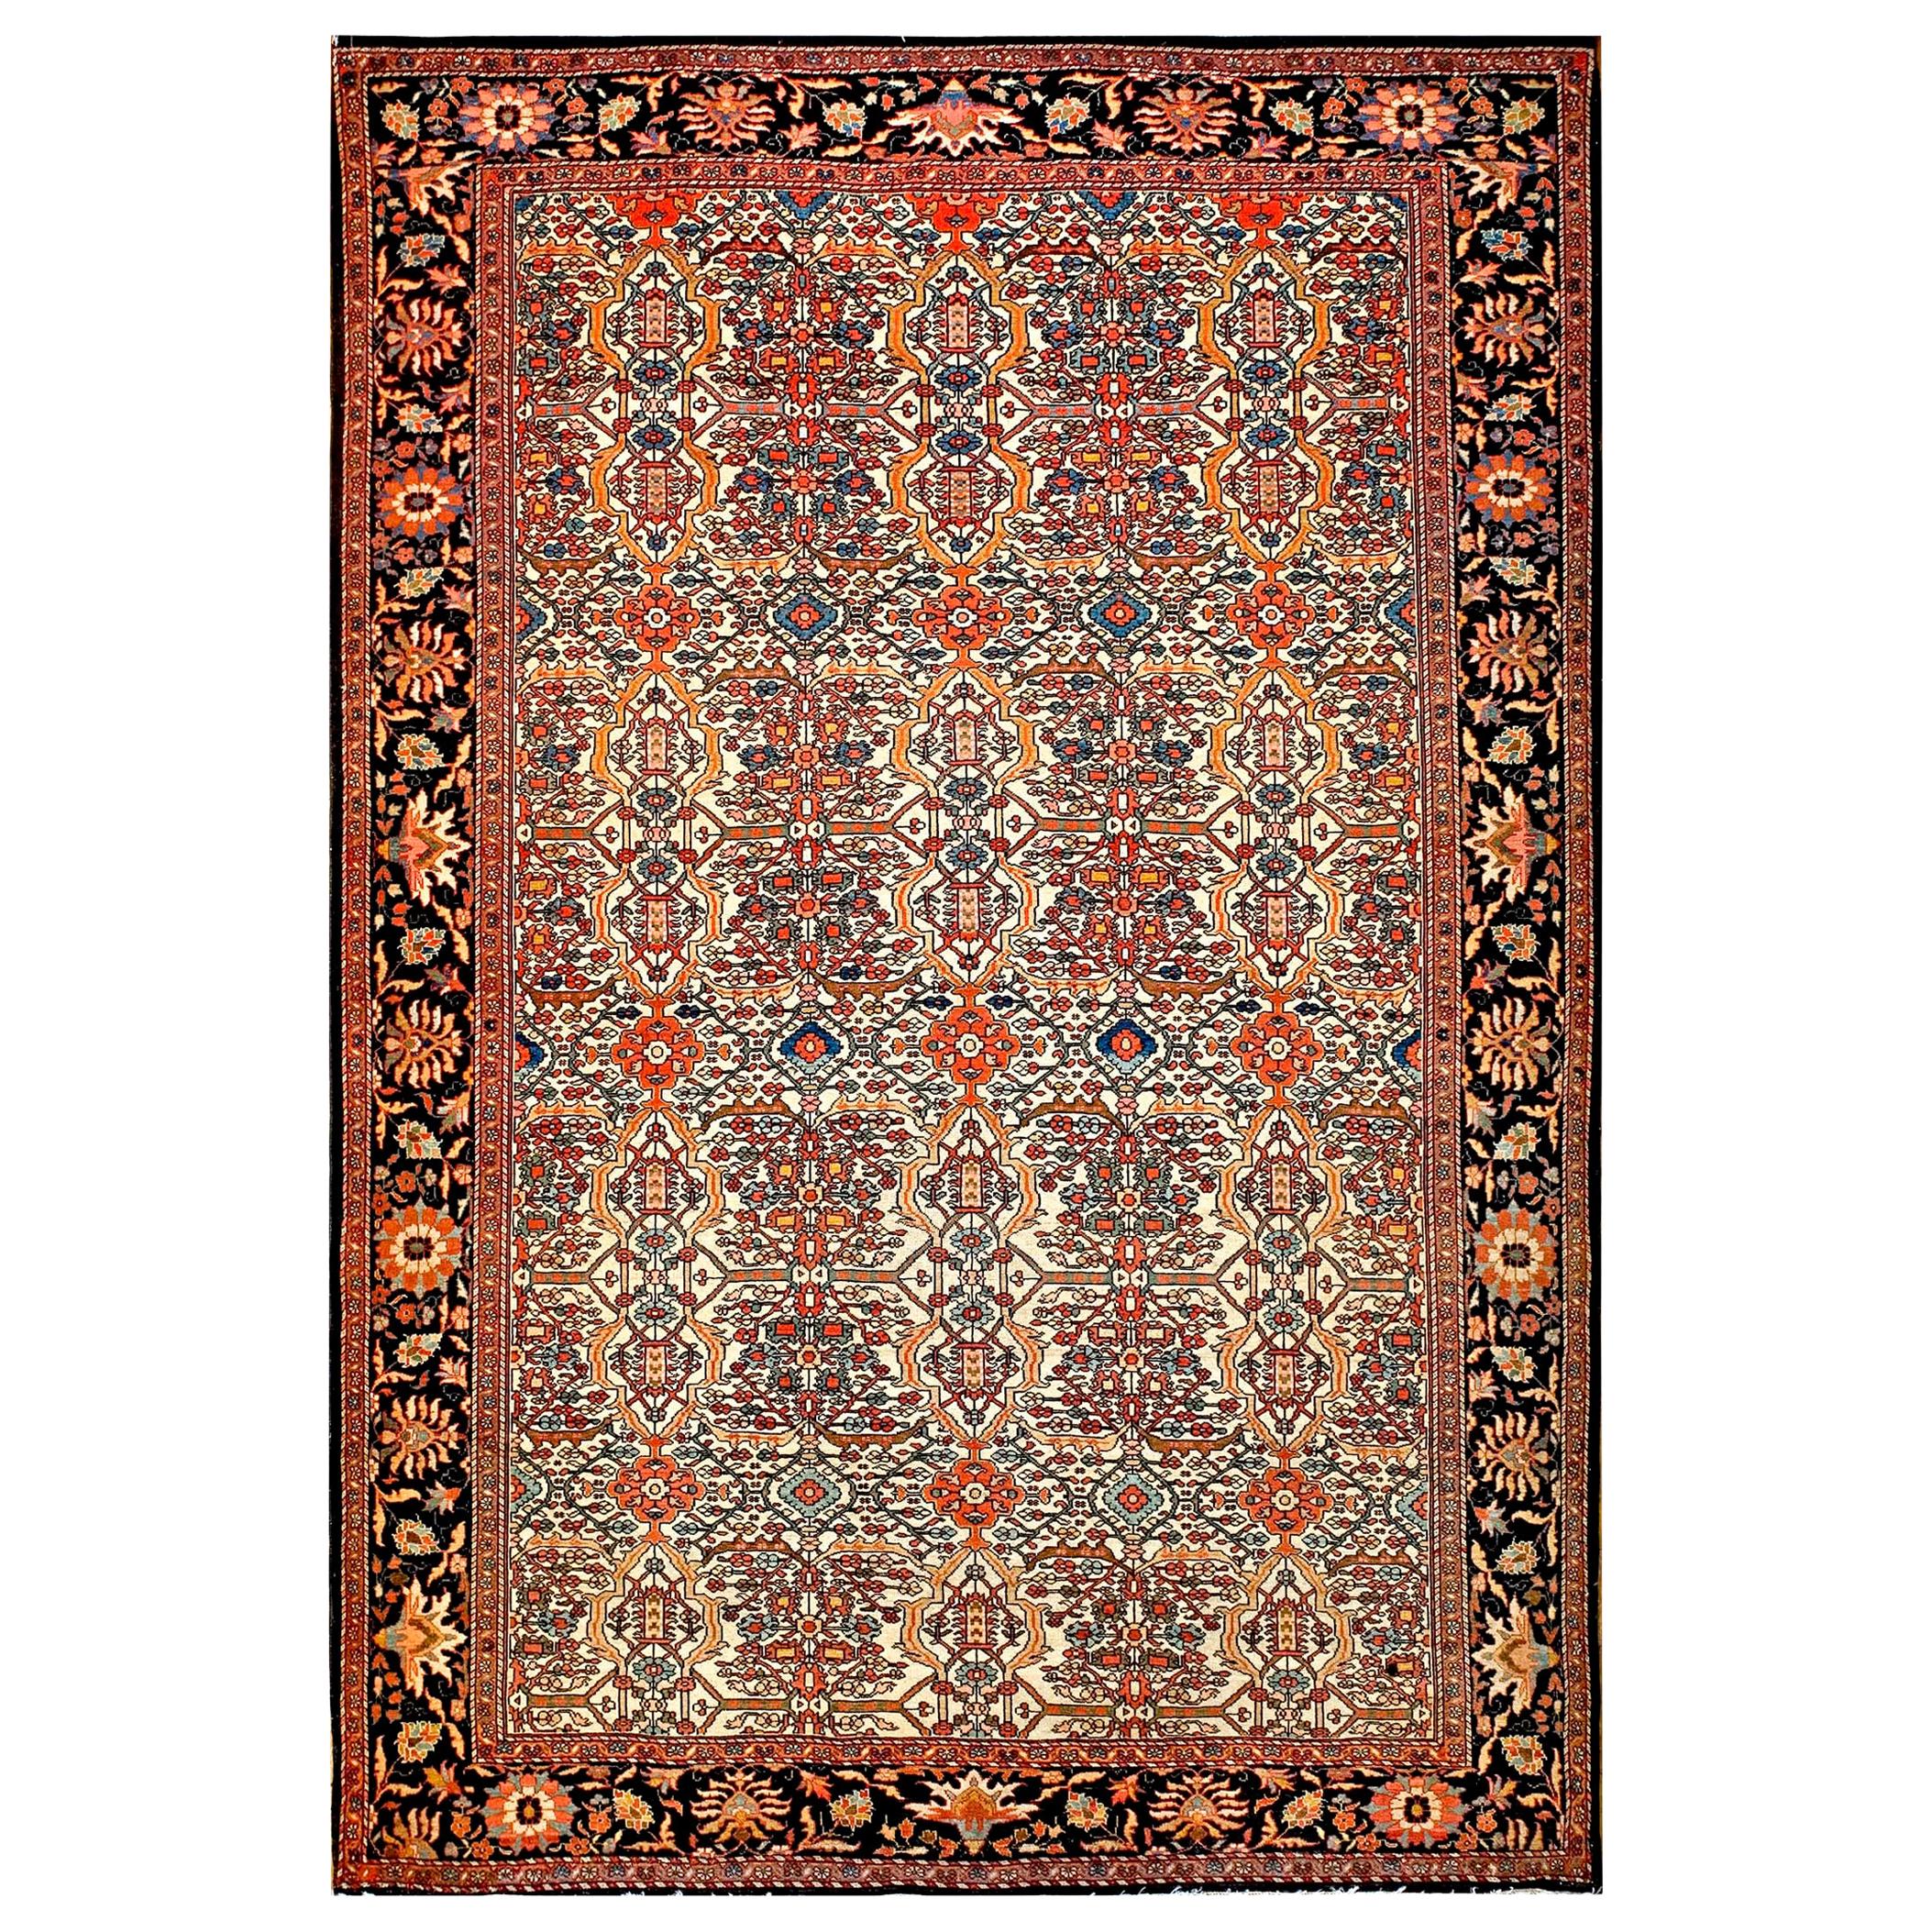 19th Century Persian Sarouk Farahan Carpet ( 4'6" x 6'6" - 137 x 196 cm ) For Sale